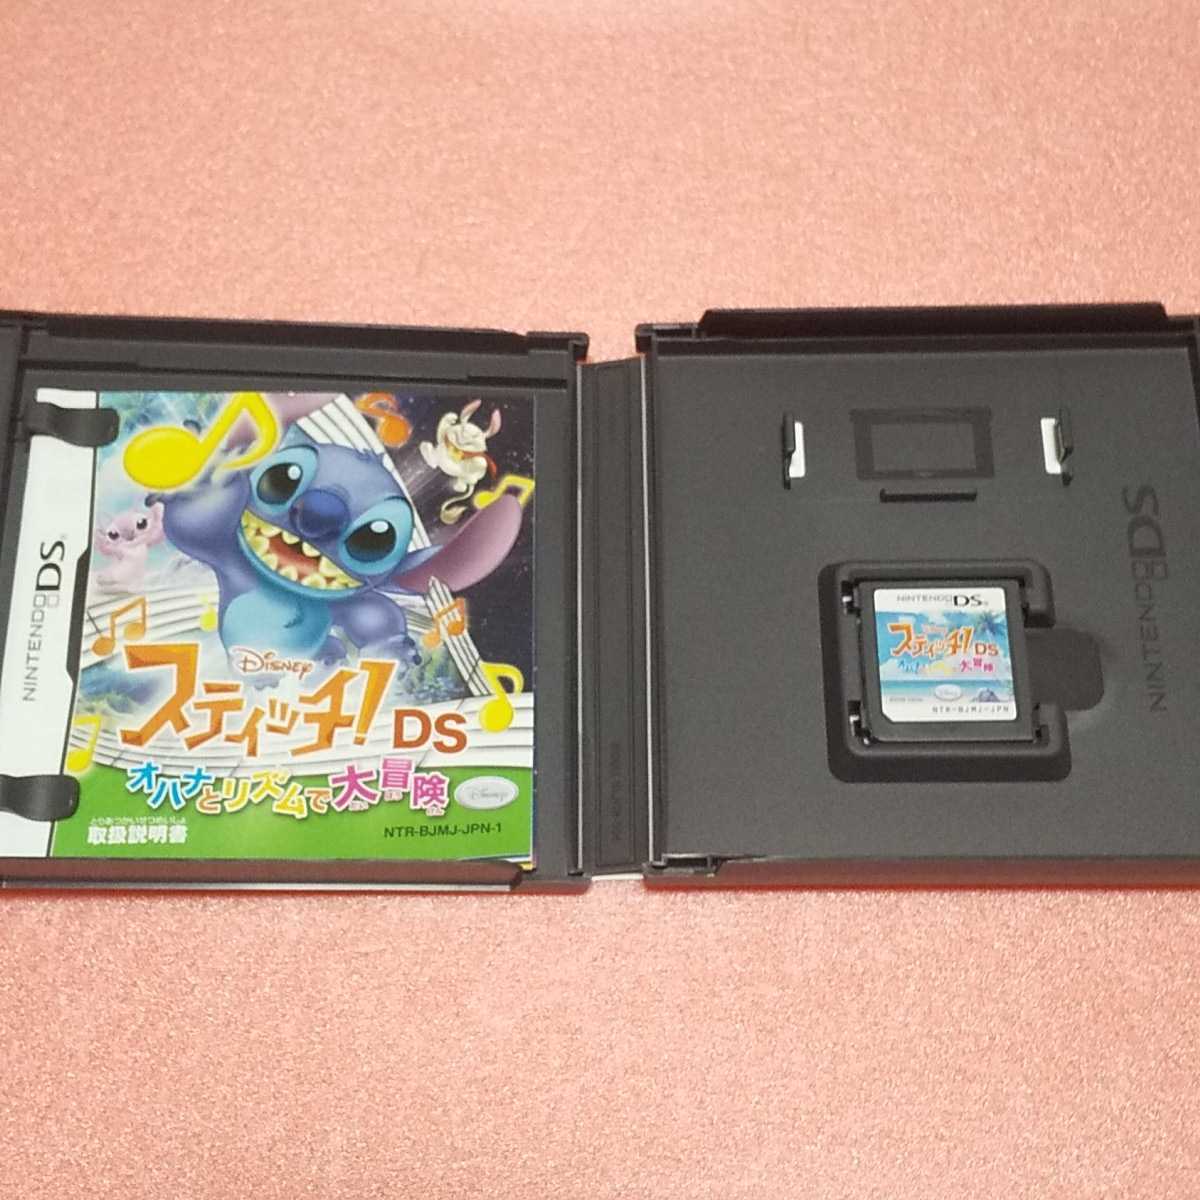 Nintendo DS スティッチDS! オハナとリズムで大冒険【管理】2208130